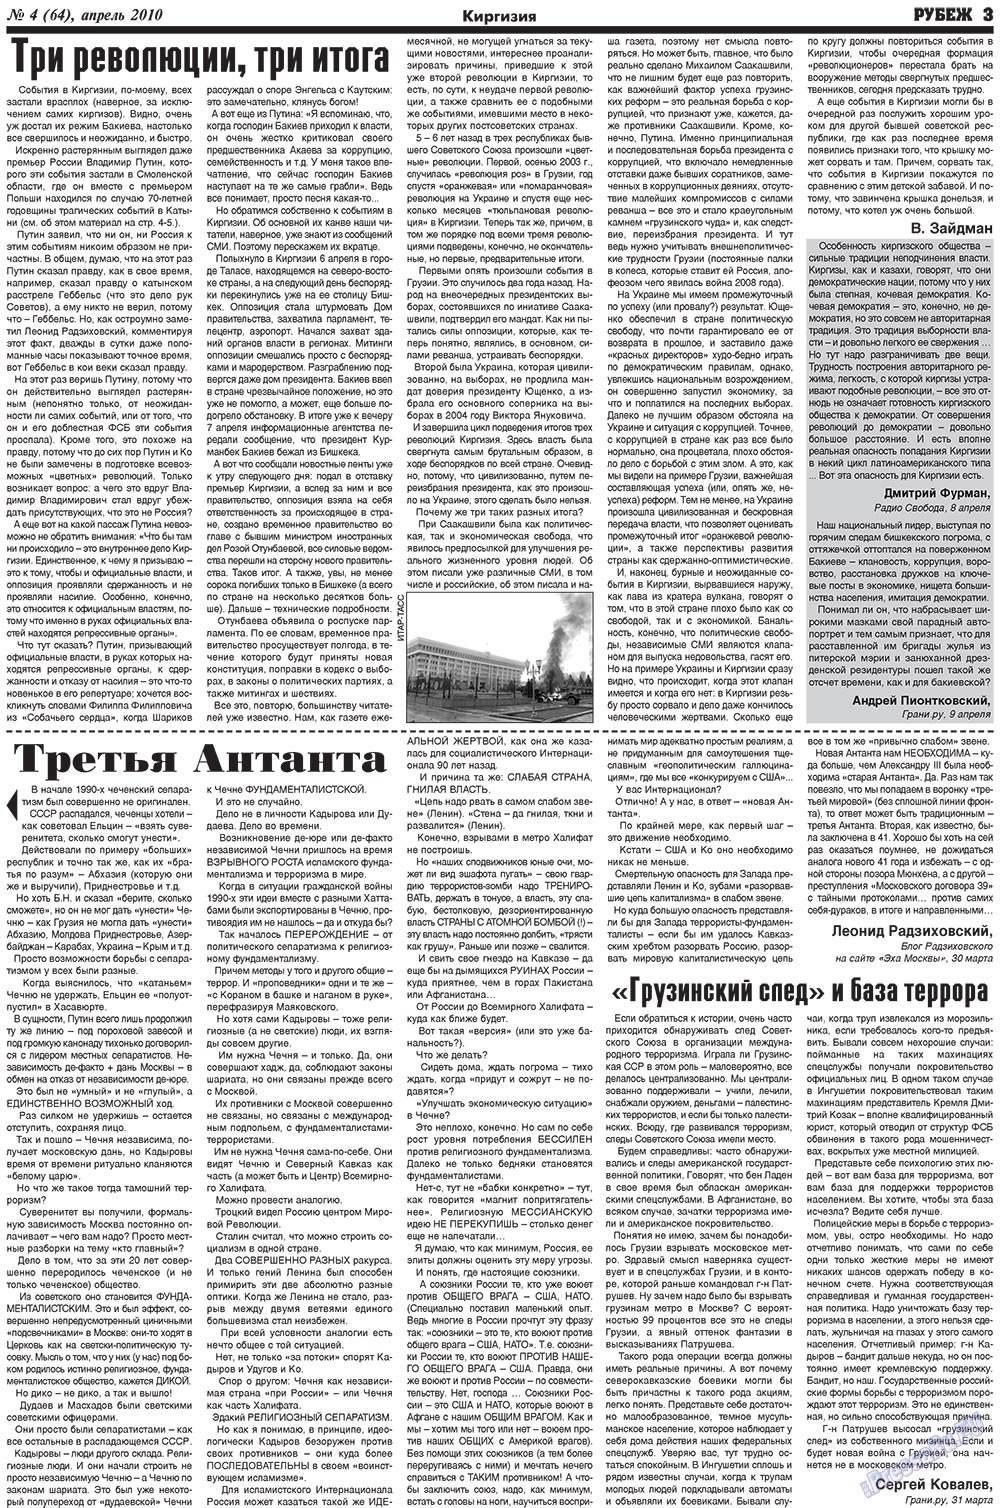 Рубеж, газета. 2010 №4 стр.3